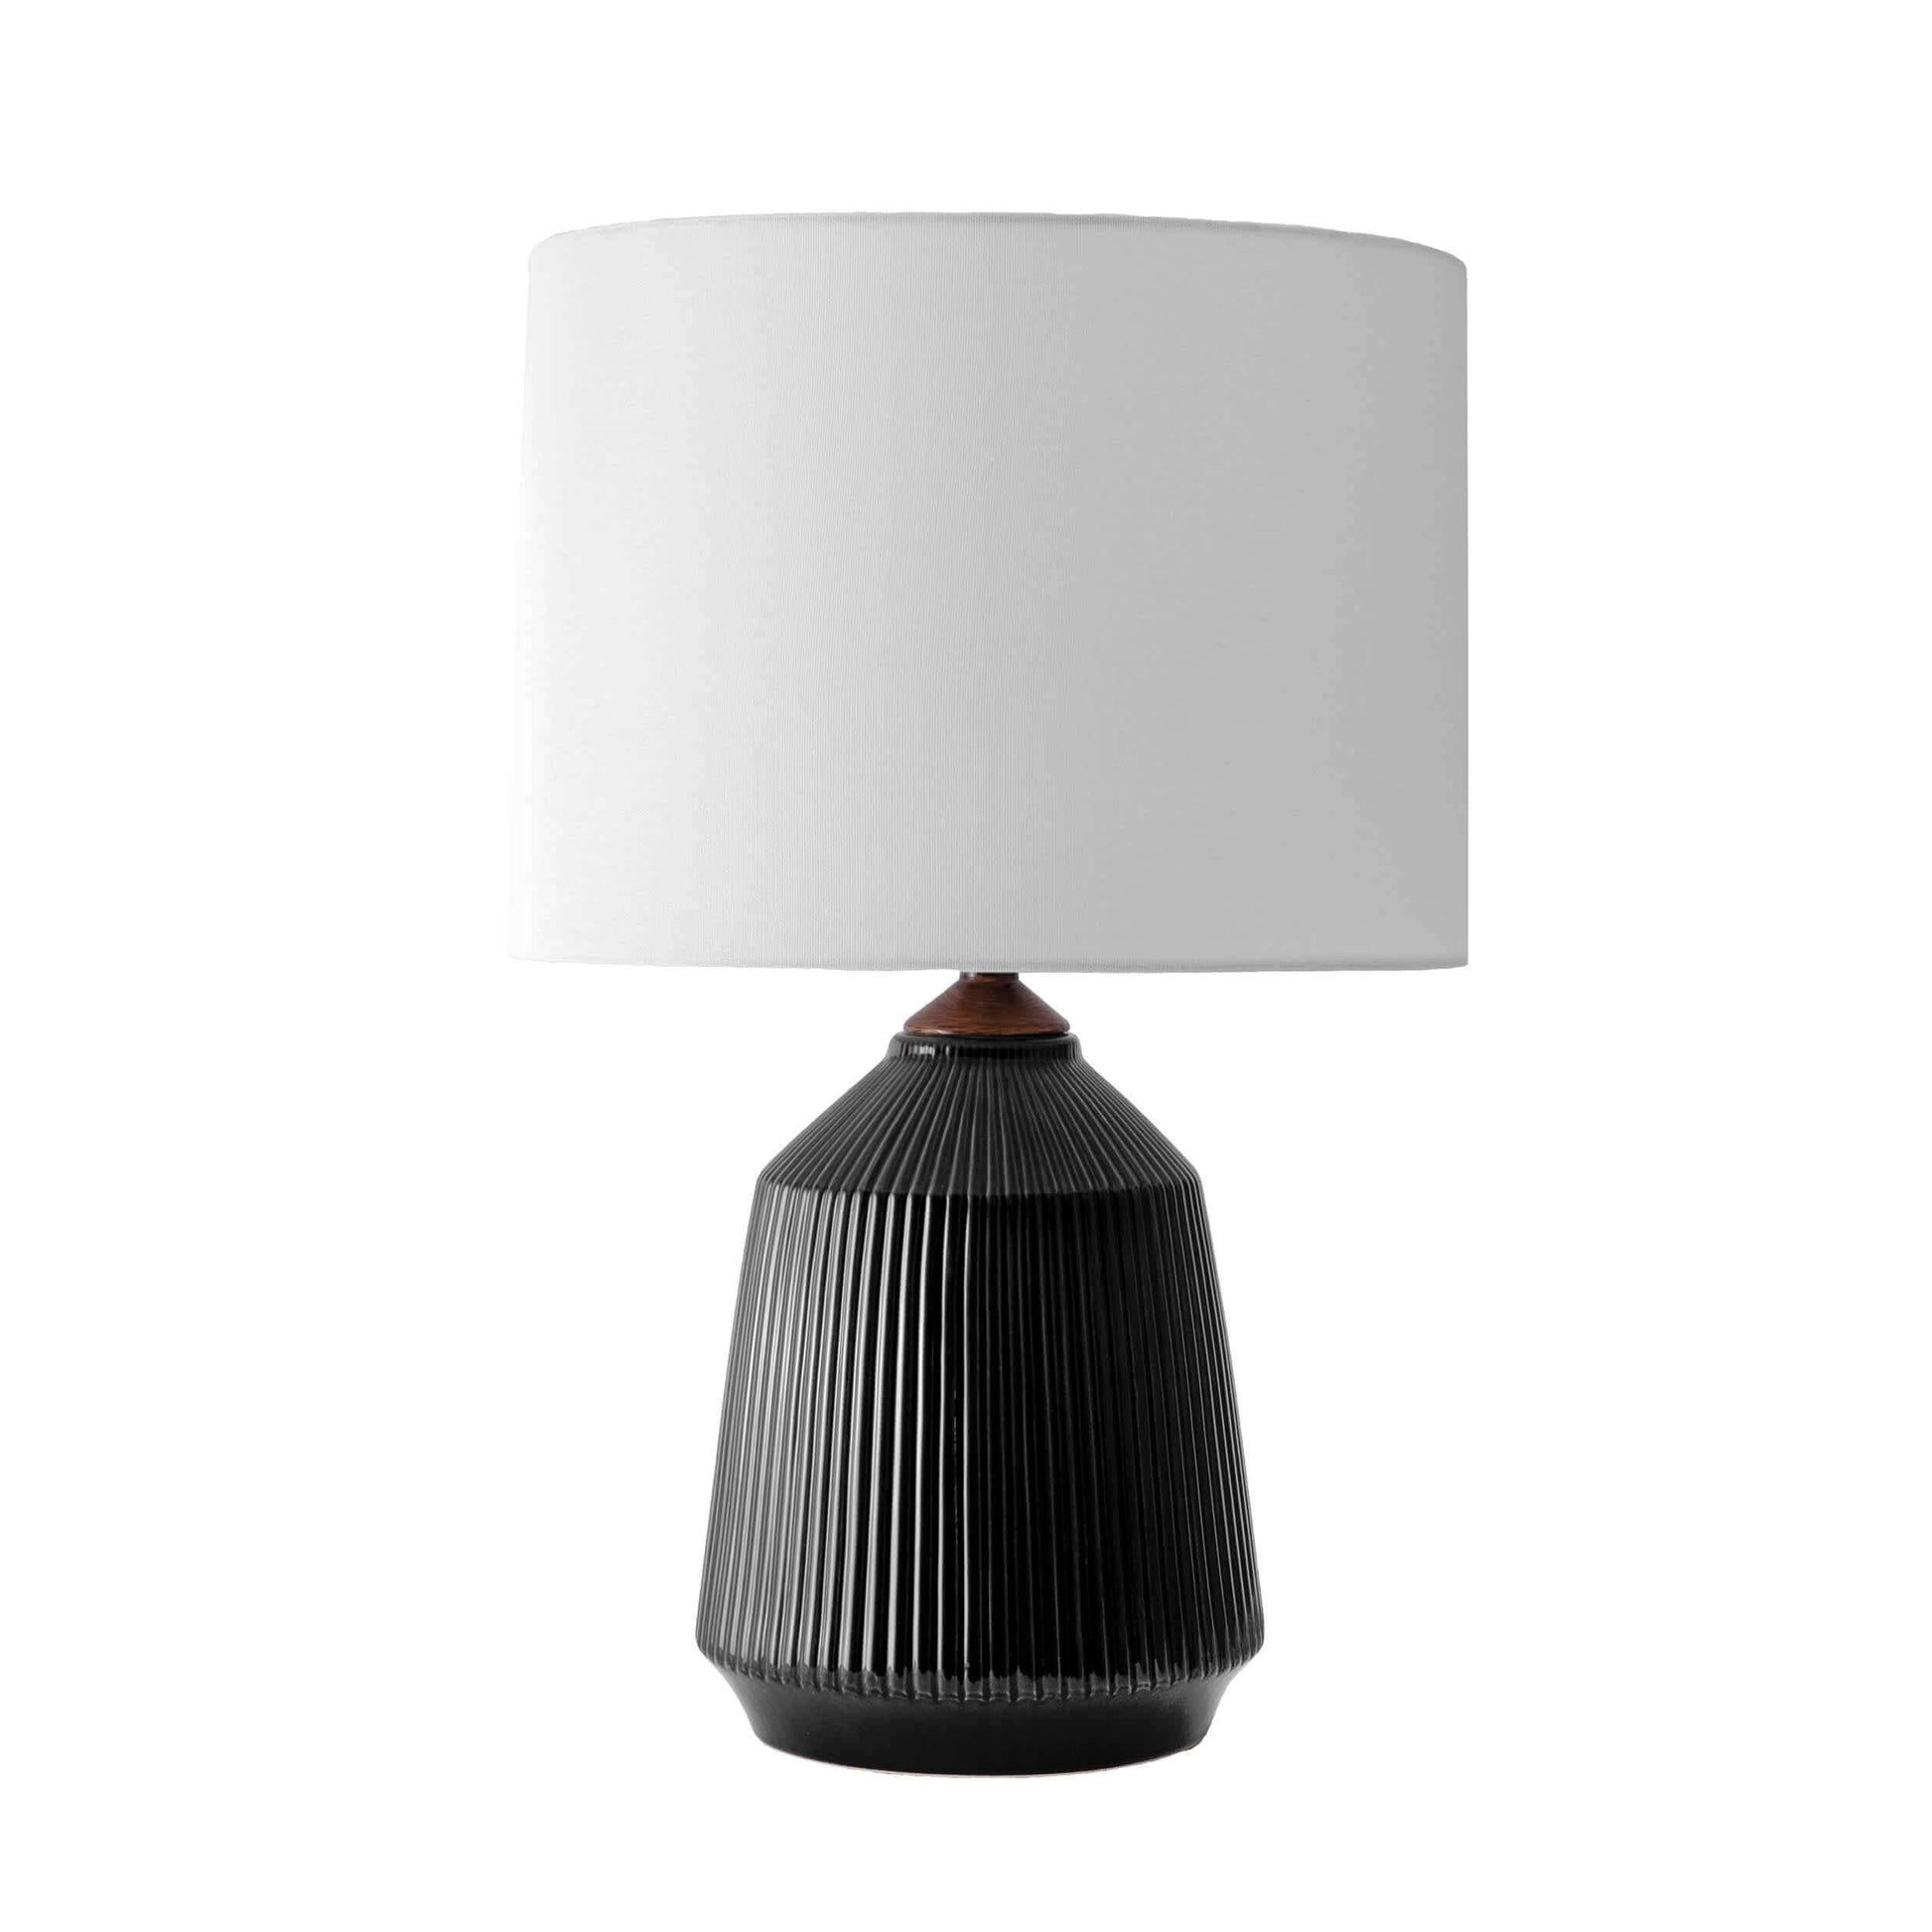 Dark Ceramic Table Lamp